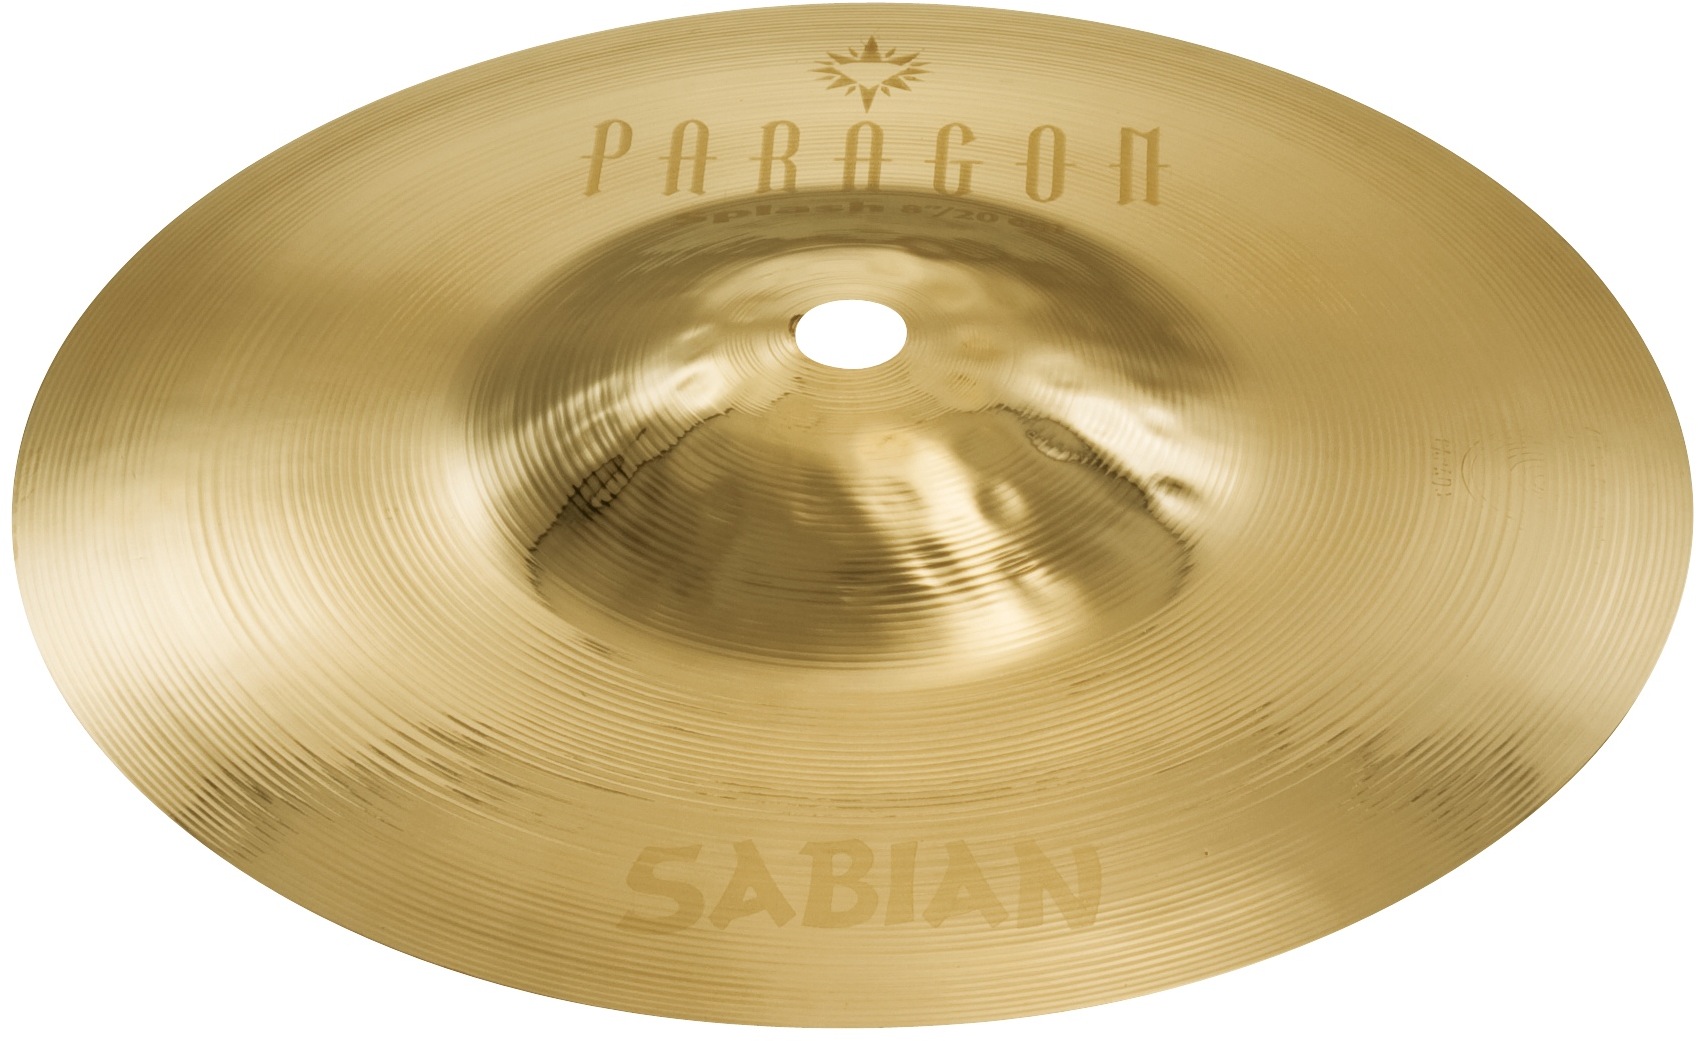 Sabian 8" Paragon Paragon Splash